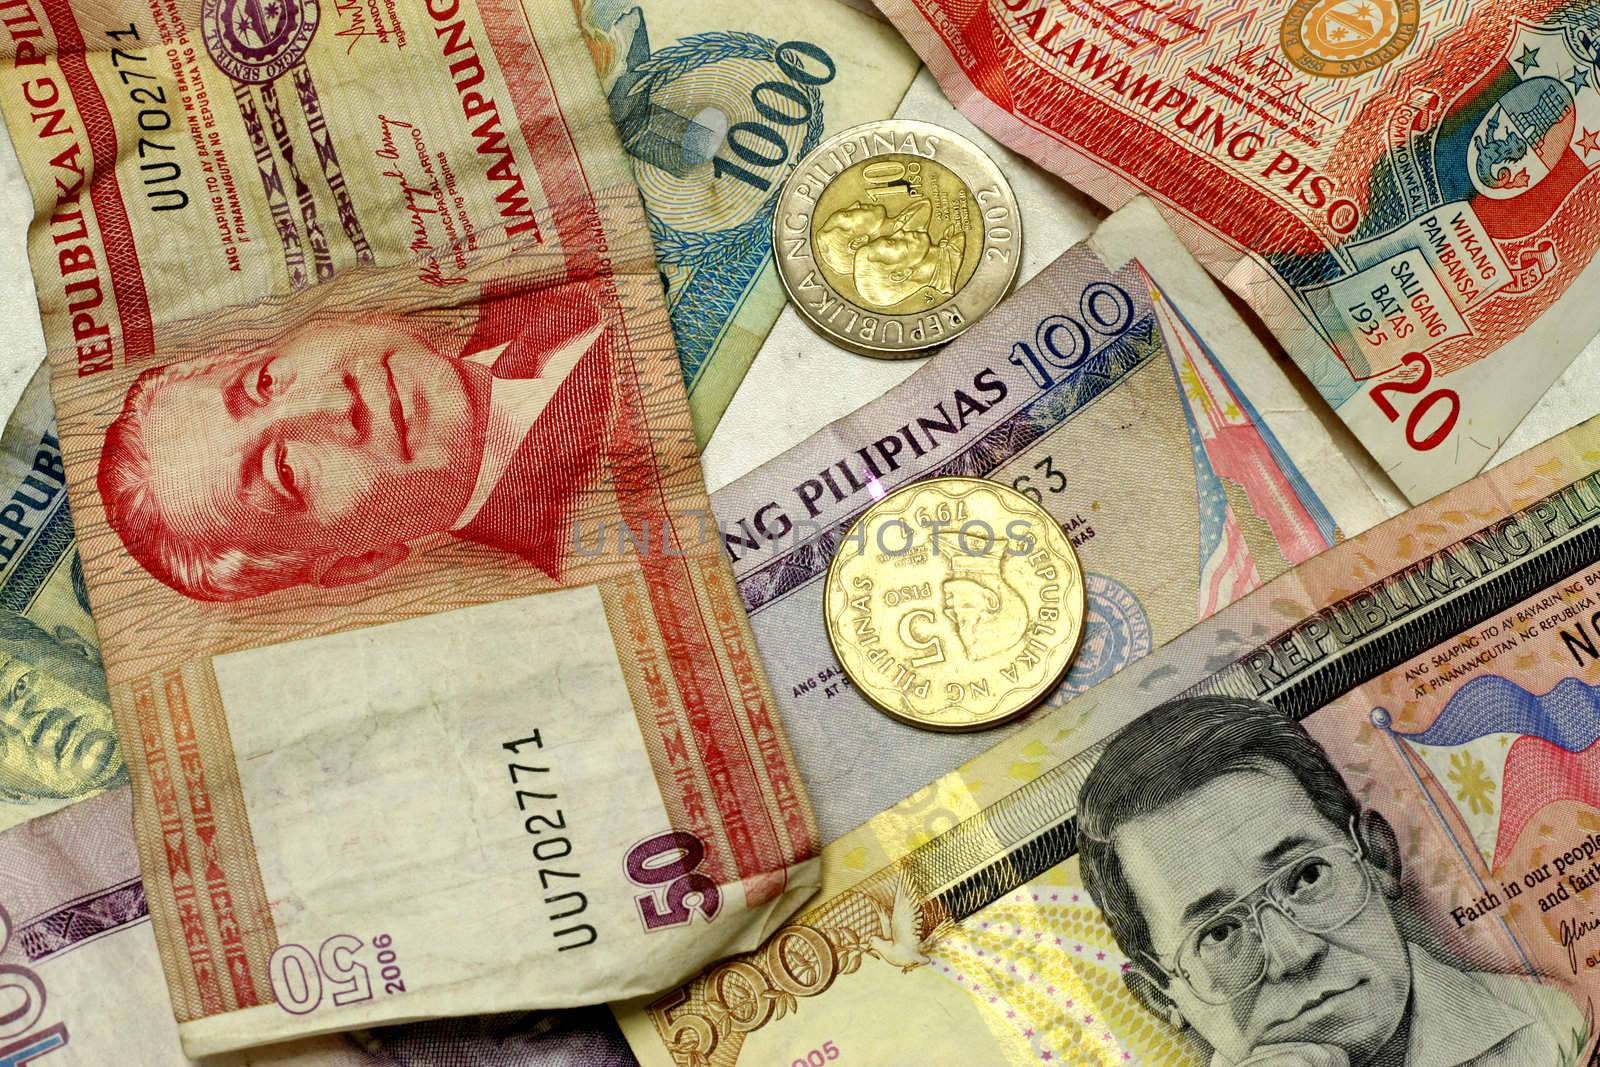 Philippine Peso by sacatani